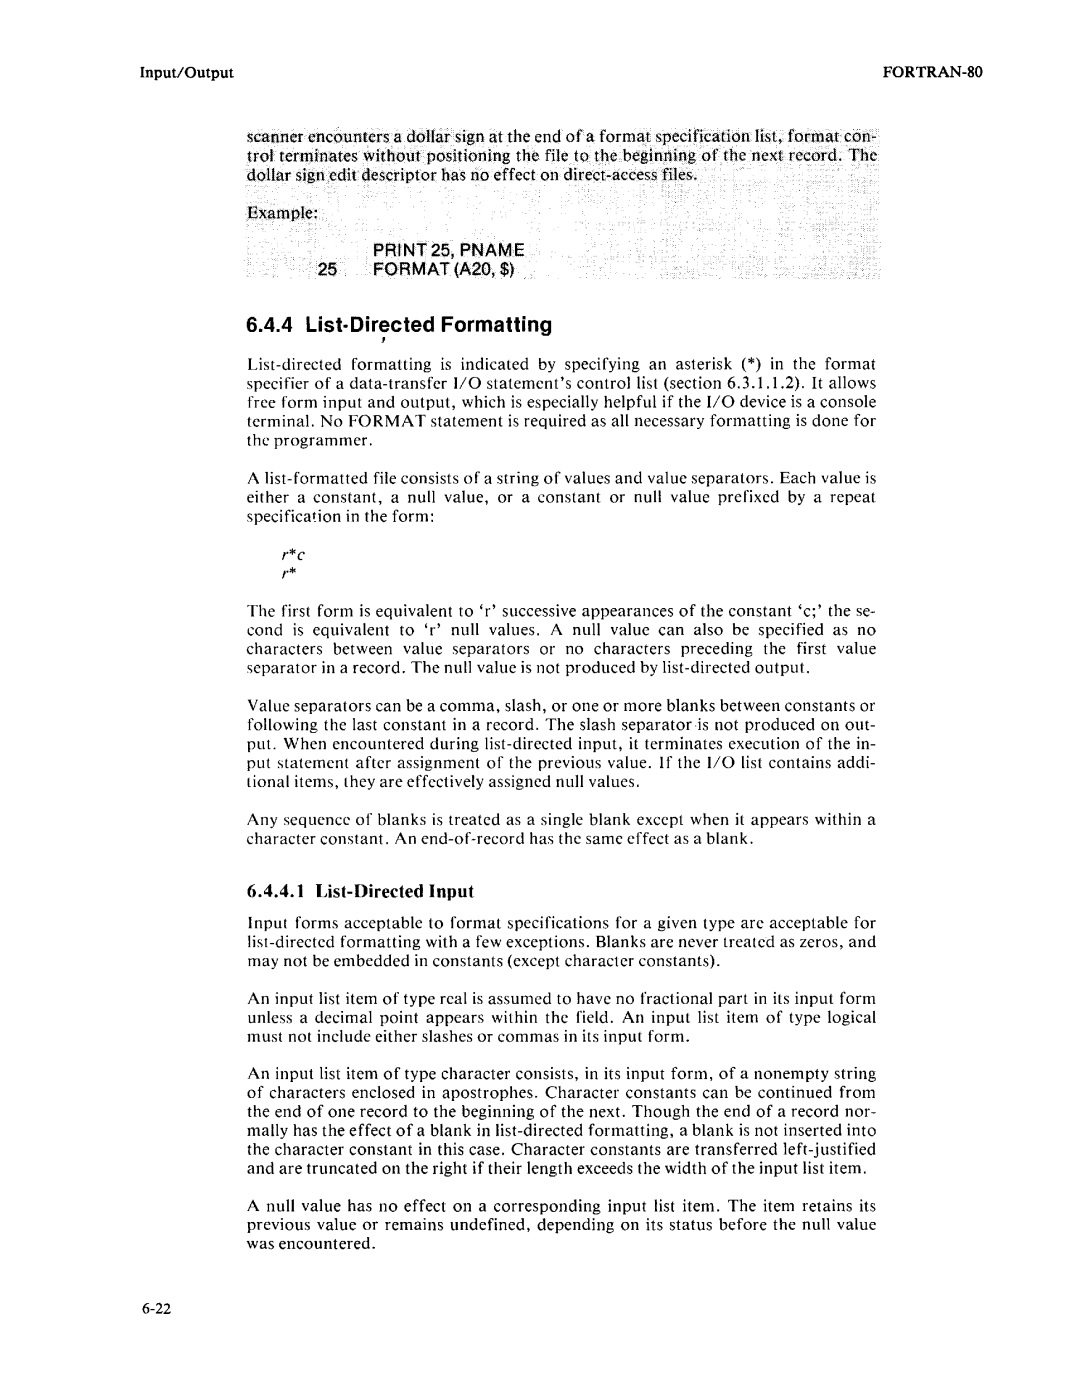 Intel fortran-80 manual 6.4.4List·Directed Formatting, List-Directed Input 